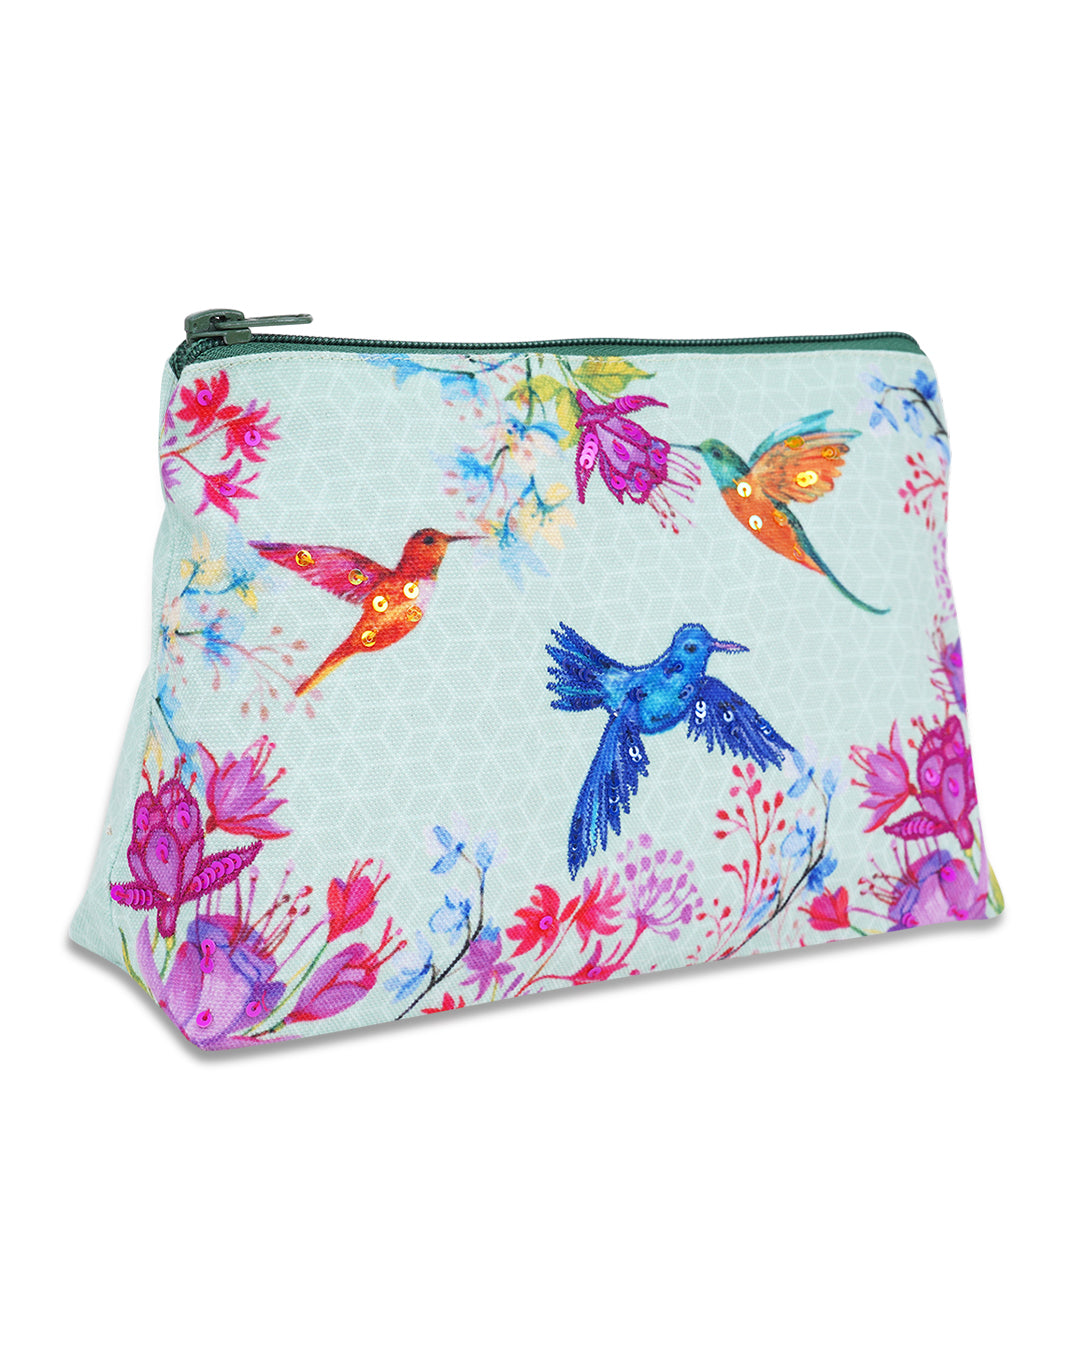 Humming Birds Cosmetic Bag